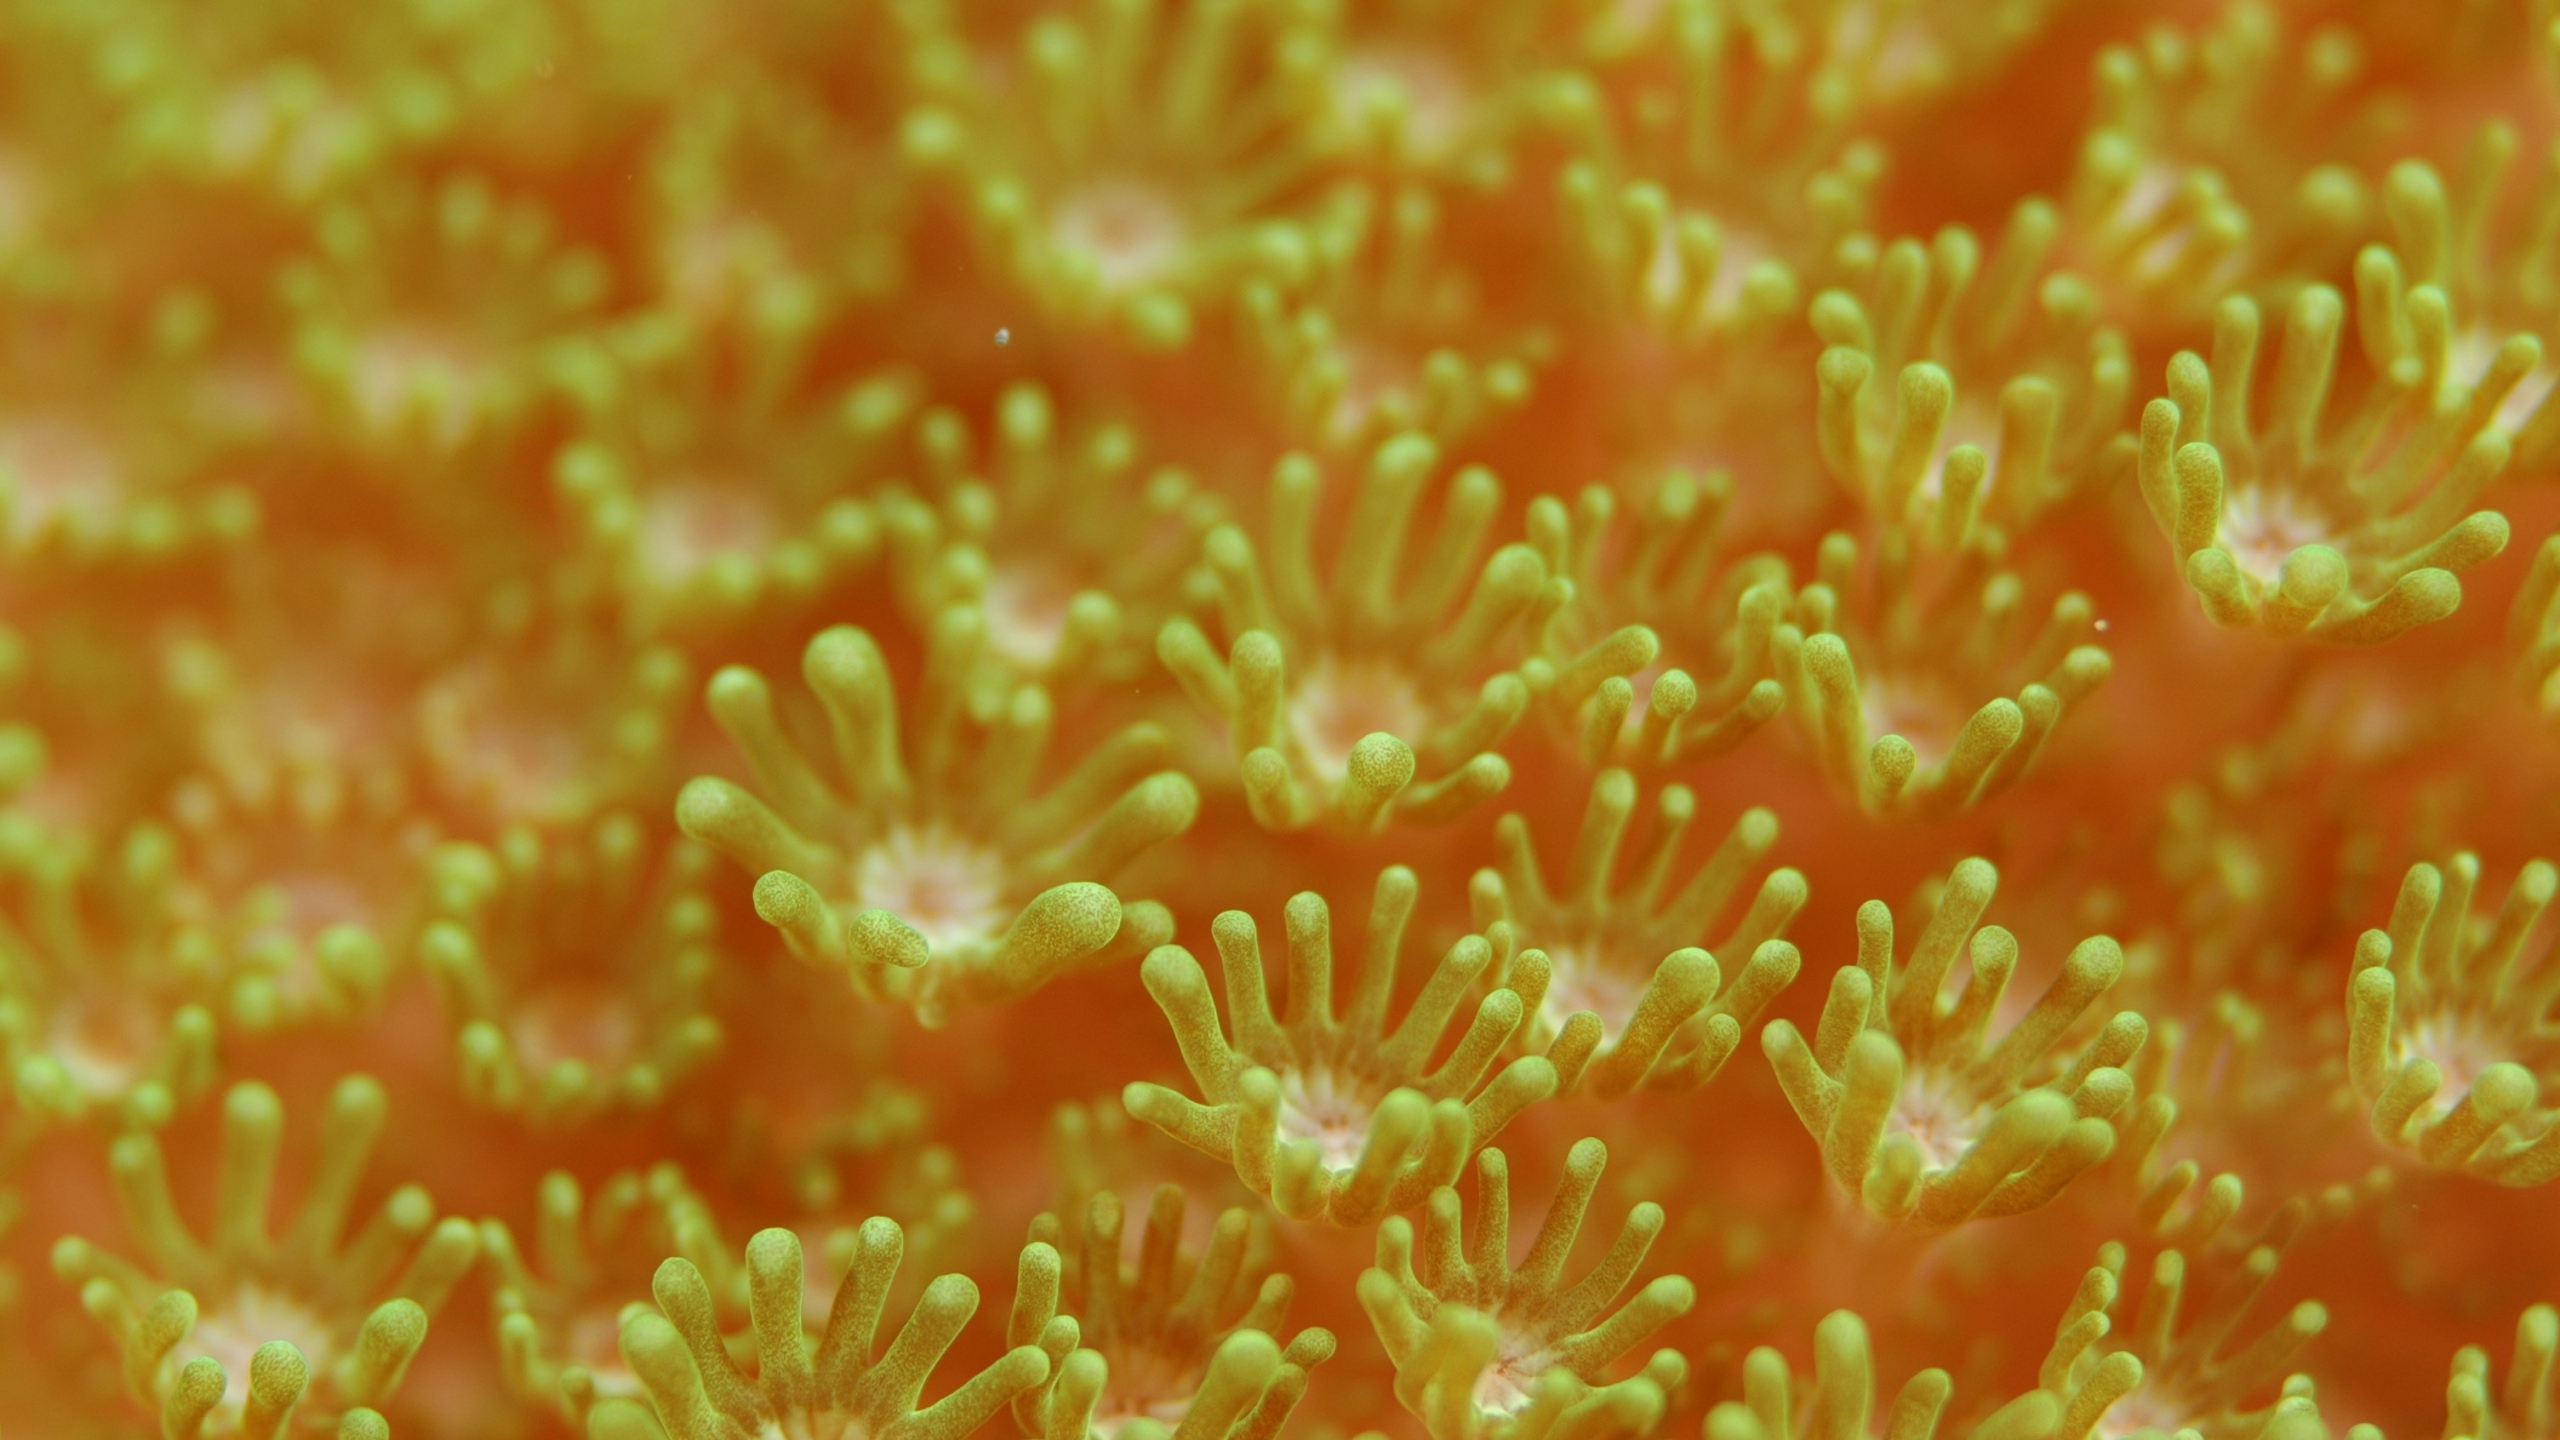 Download Wallpaper 2560x1440 Sea anemones, Algae, Underwater world ...